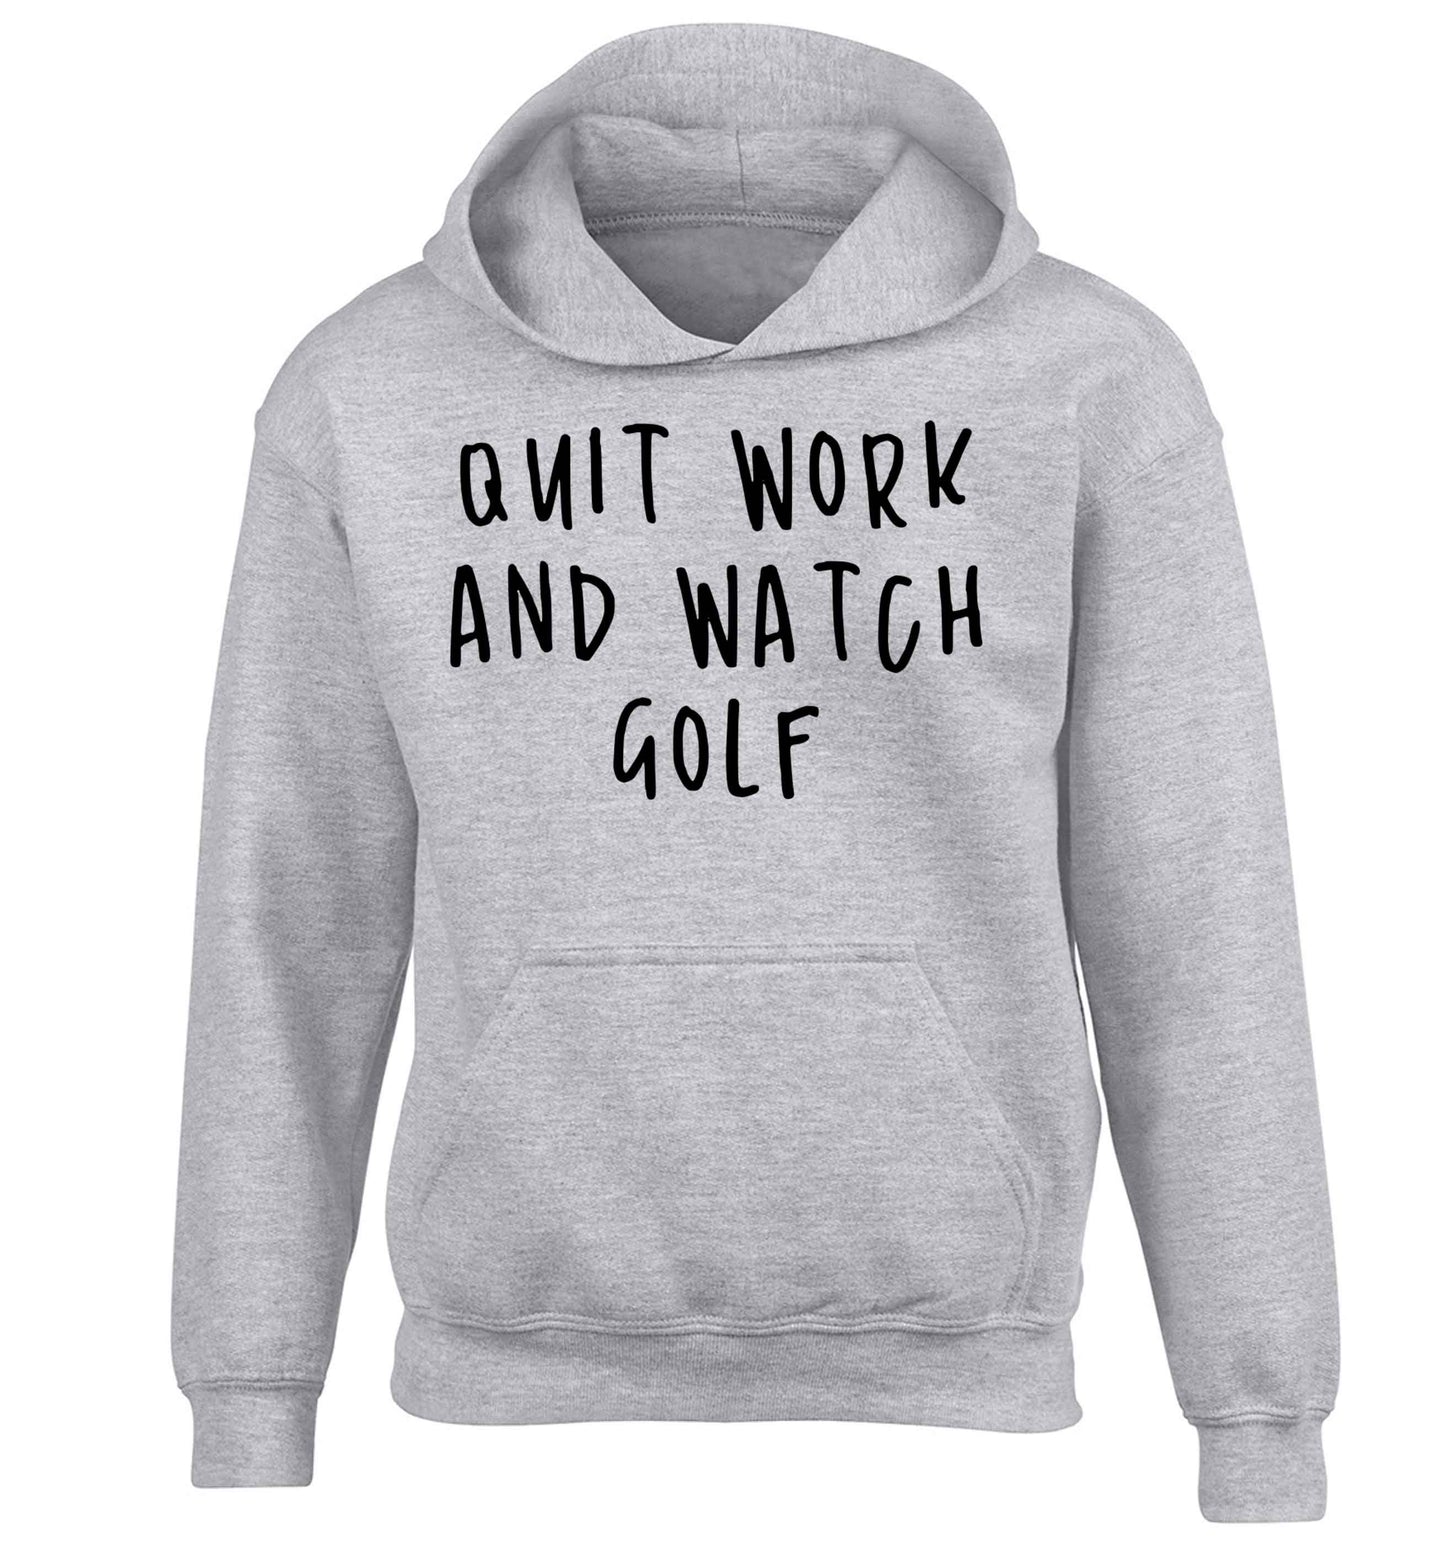 Quit work and watch golf children's grey hoodie 12-13 Years